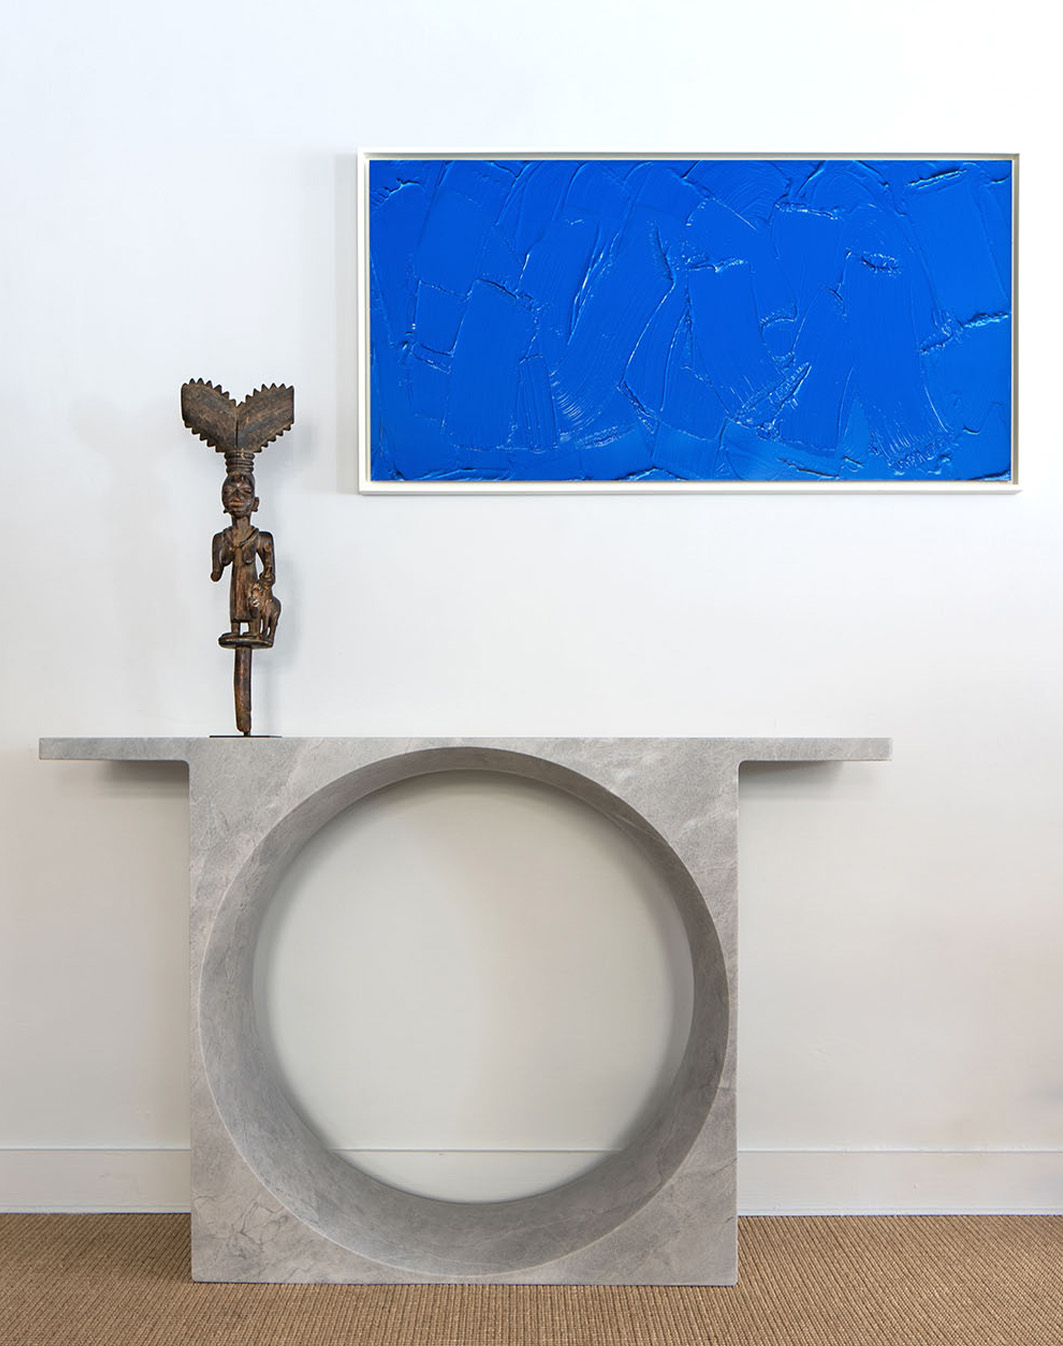 Virgil Abloh - Lucas Ratton x kamel mennour x Galerie kreo in Saint-Tropez